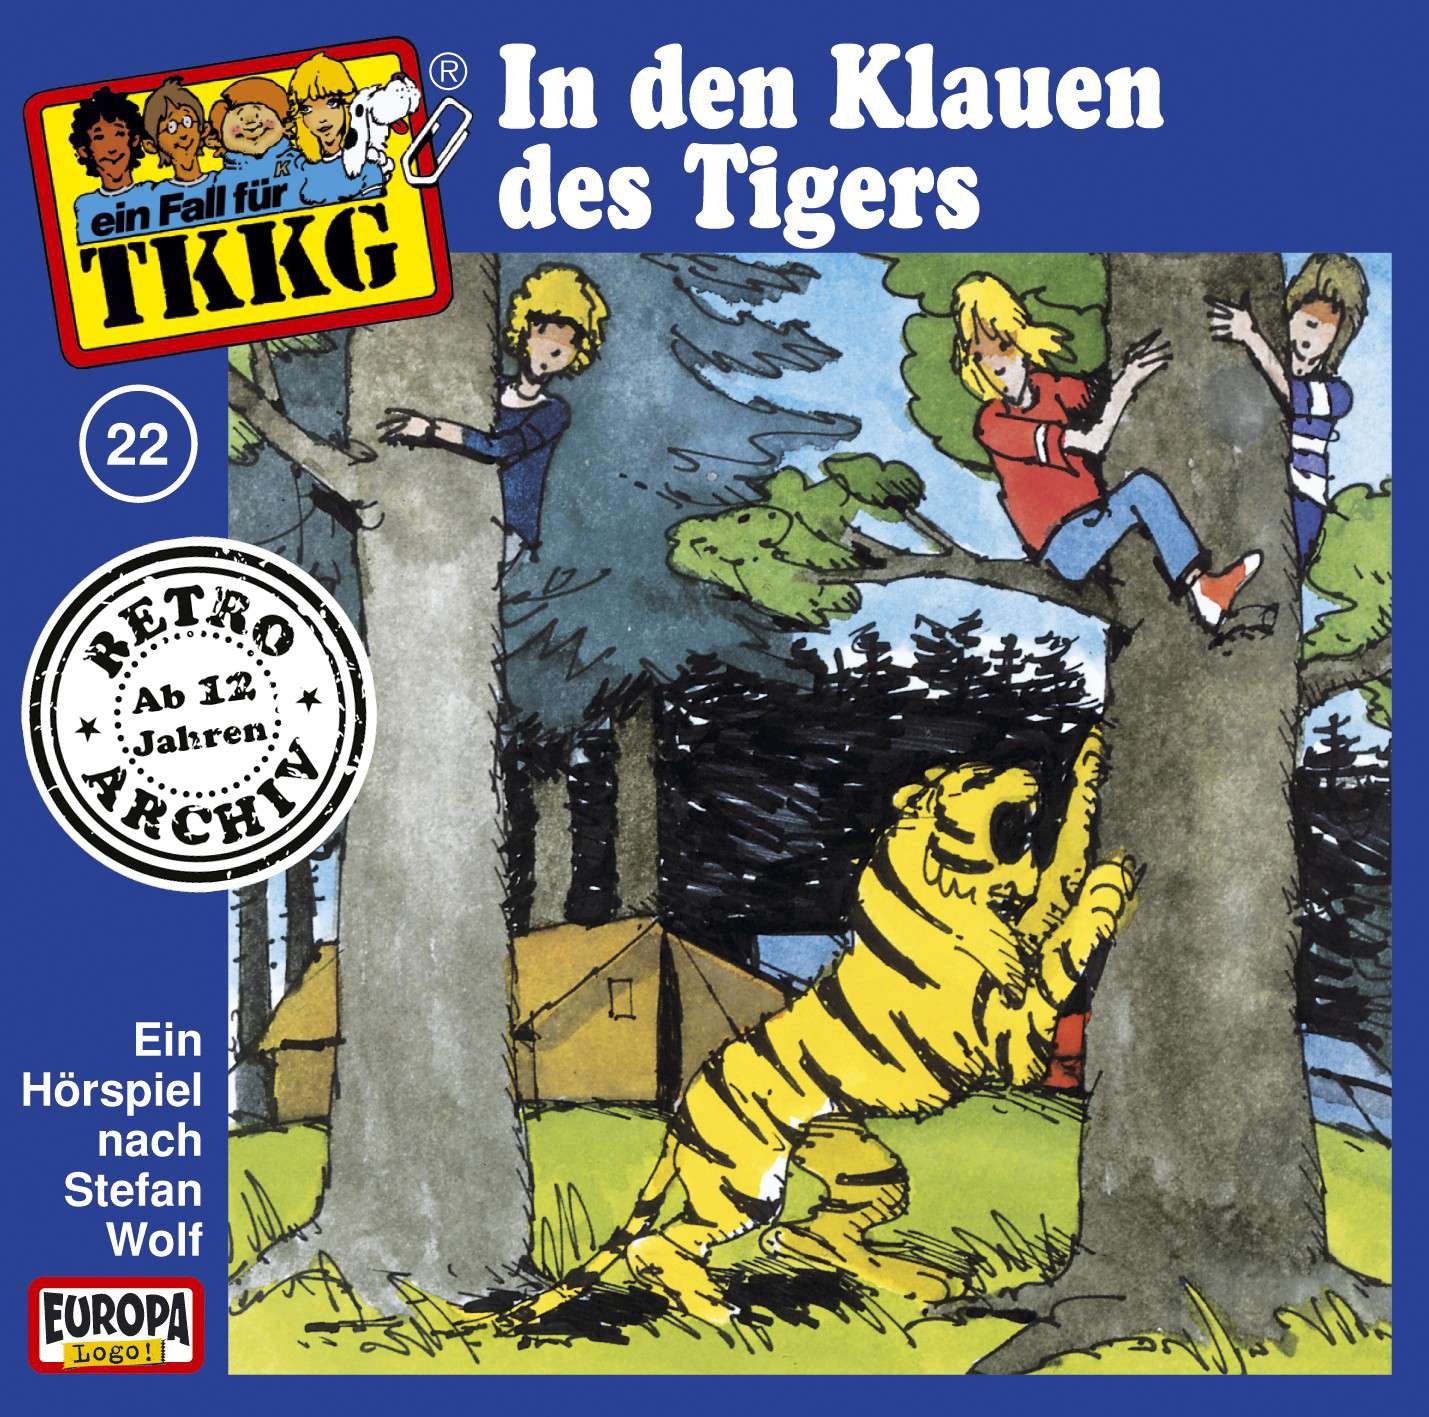 TKKG Retro-Archiv - In den Klauen des Tigers